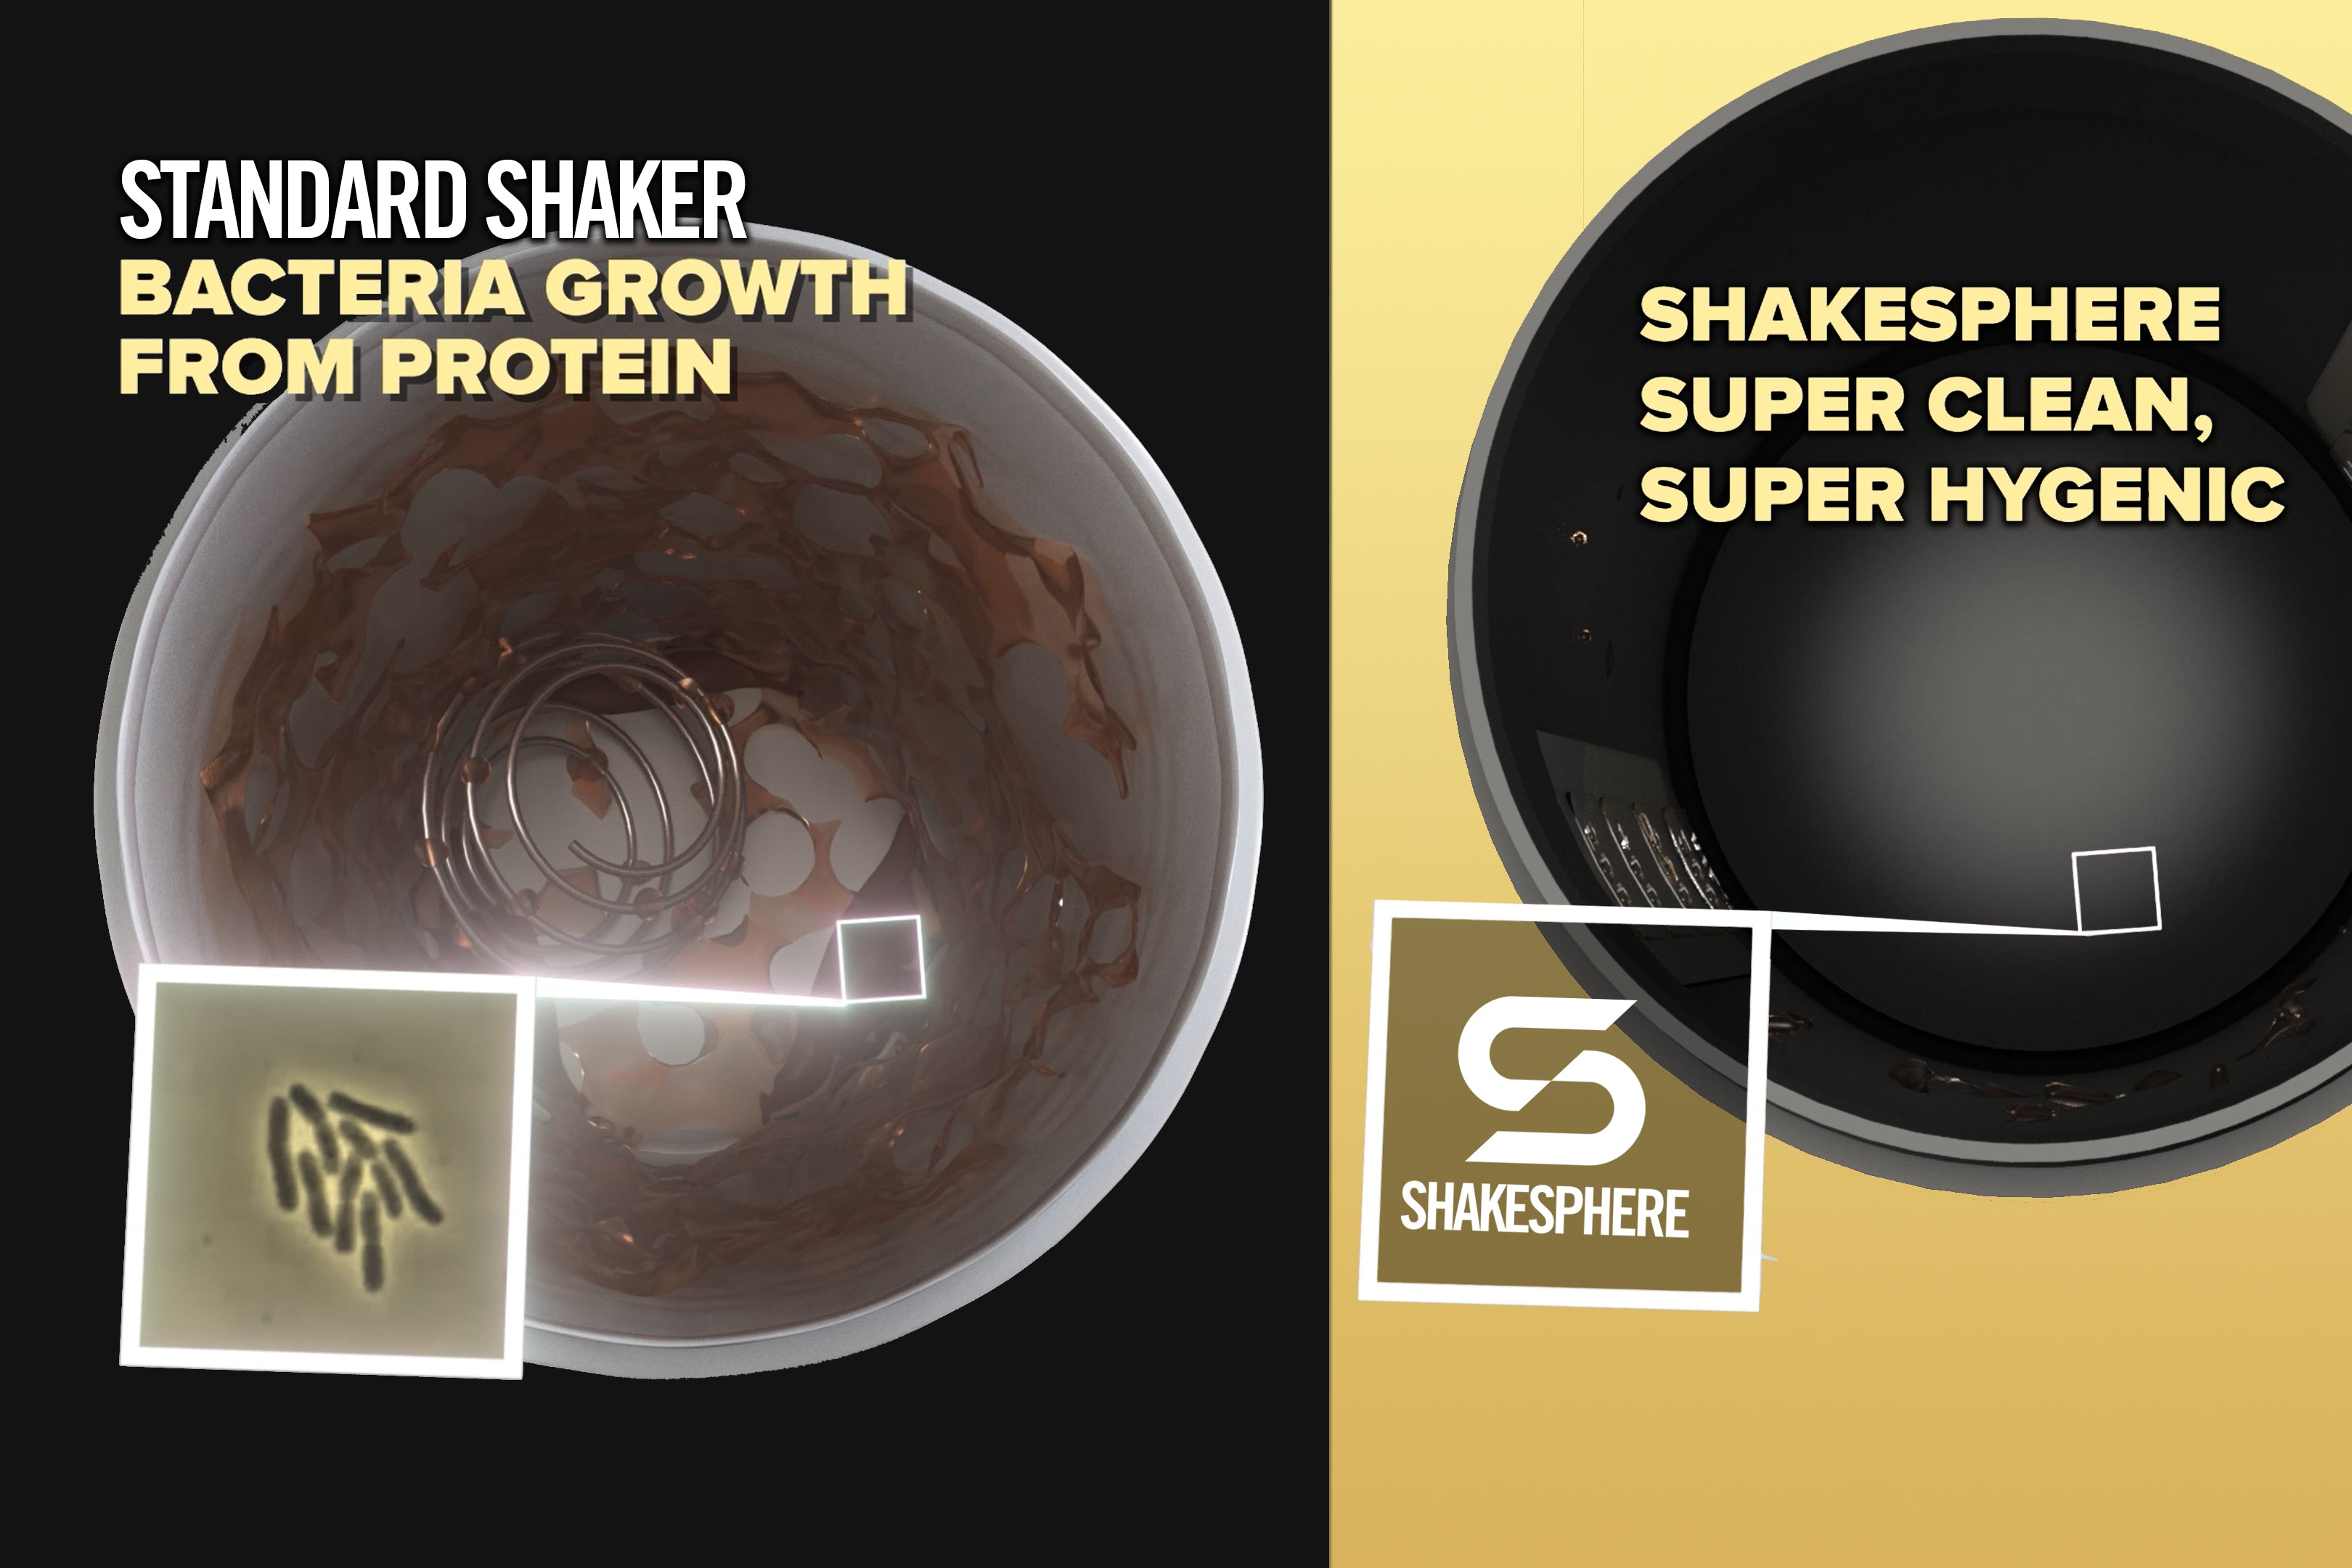 ShakeSphere Tumbler View | Shaker Bottles | 700ml - Rose Gold & Clear